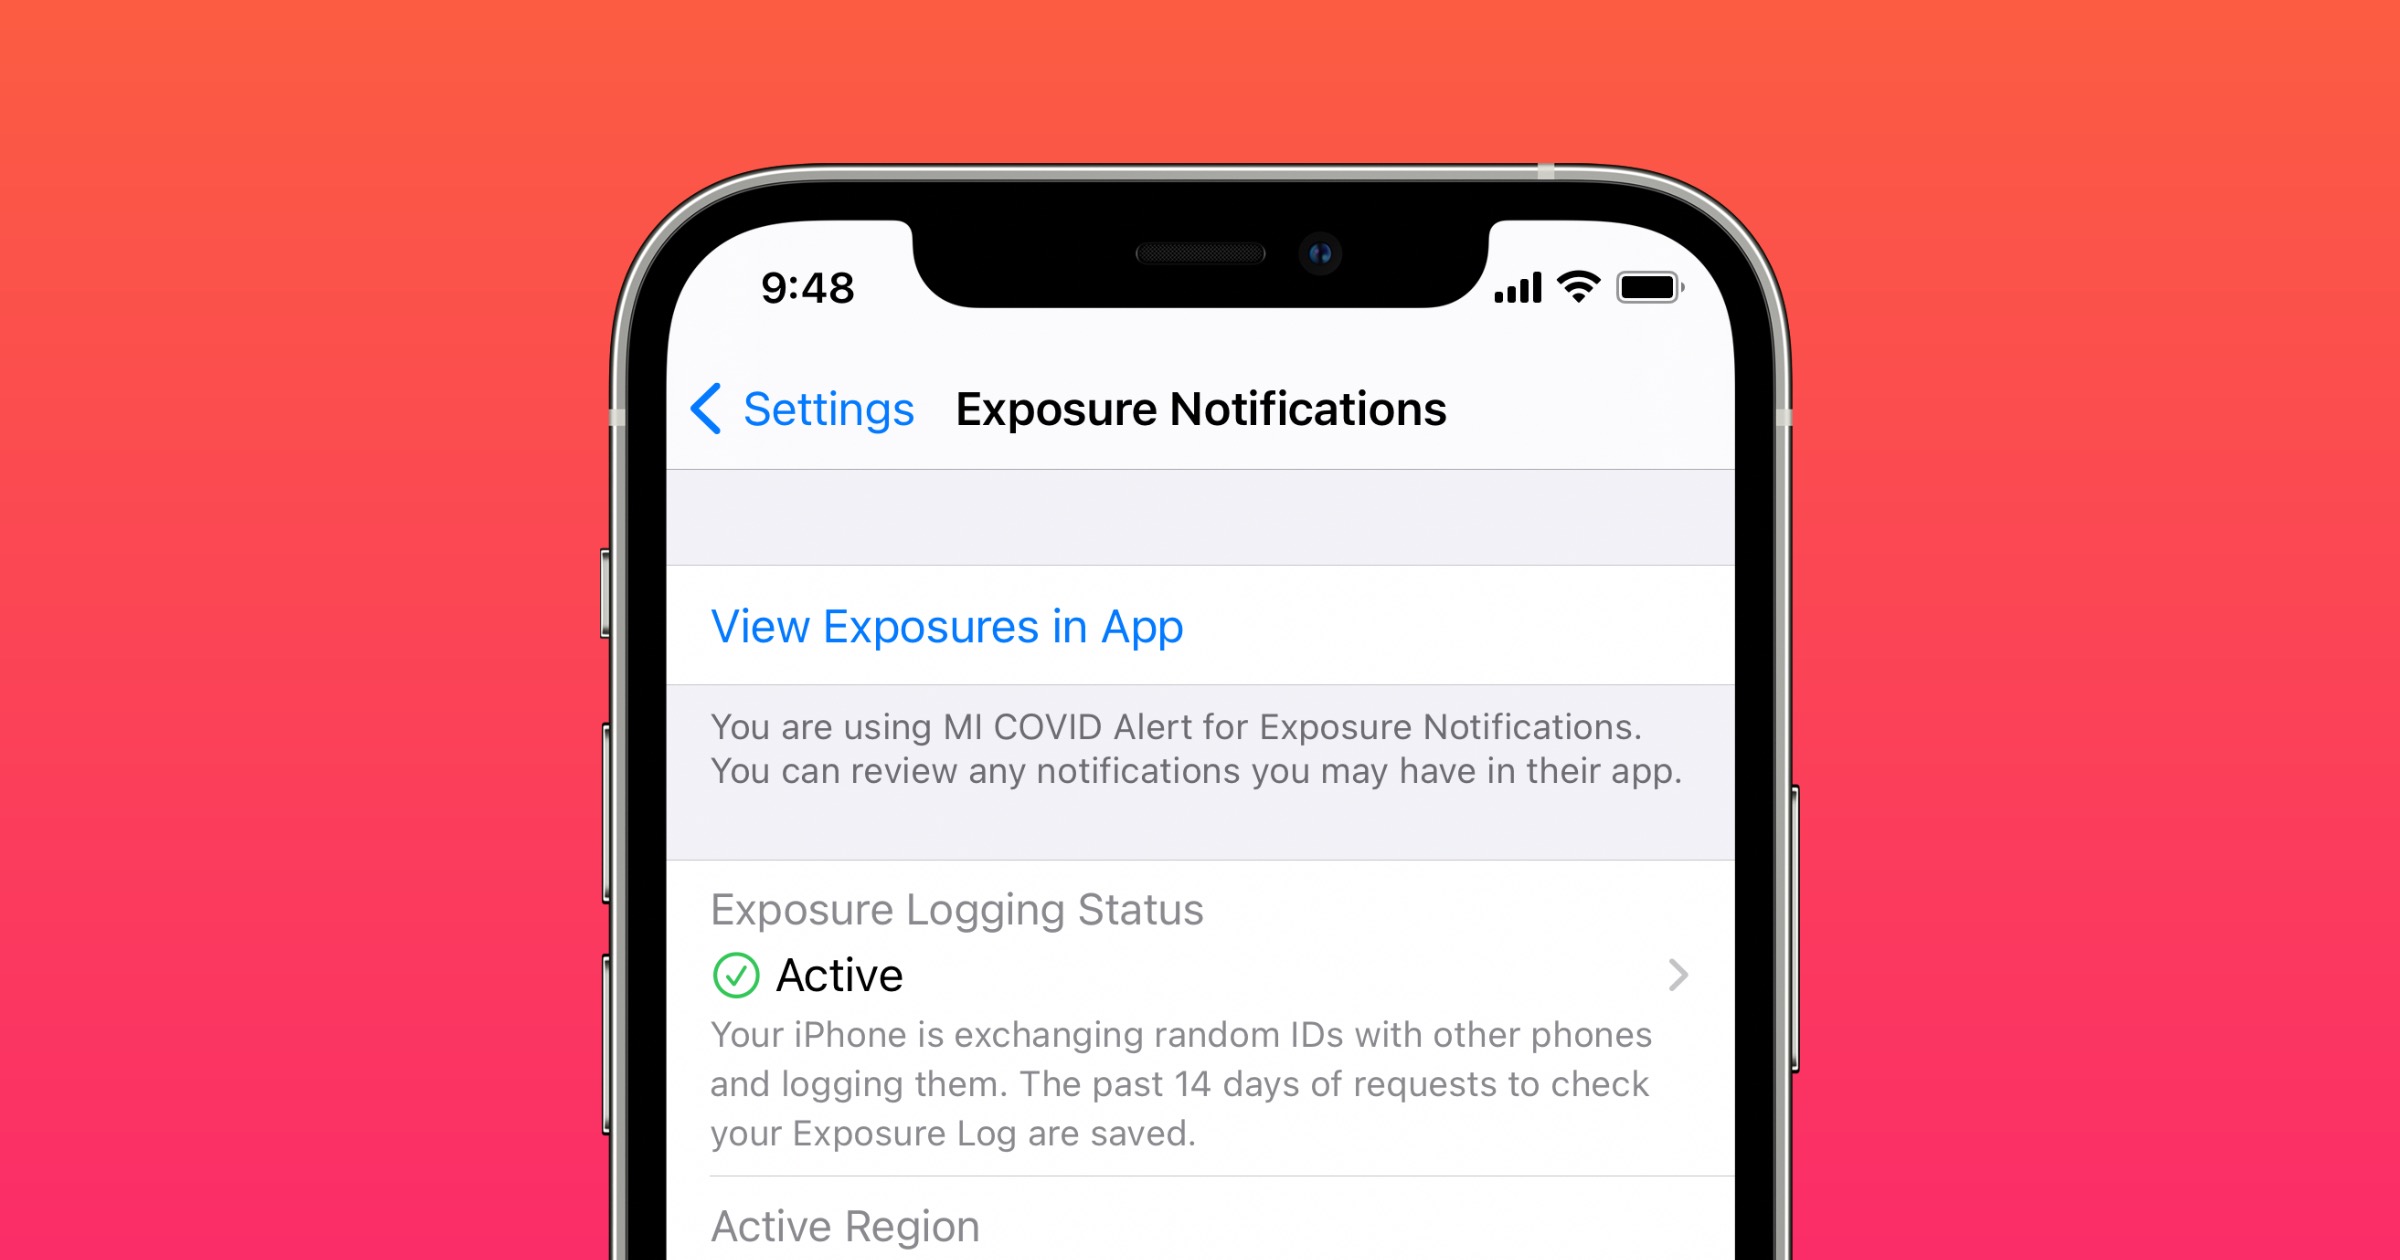 Exposure notifications on iPhone